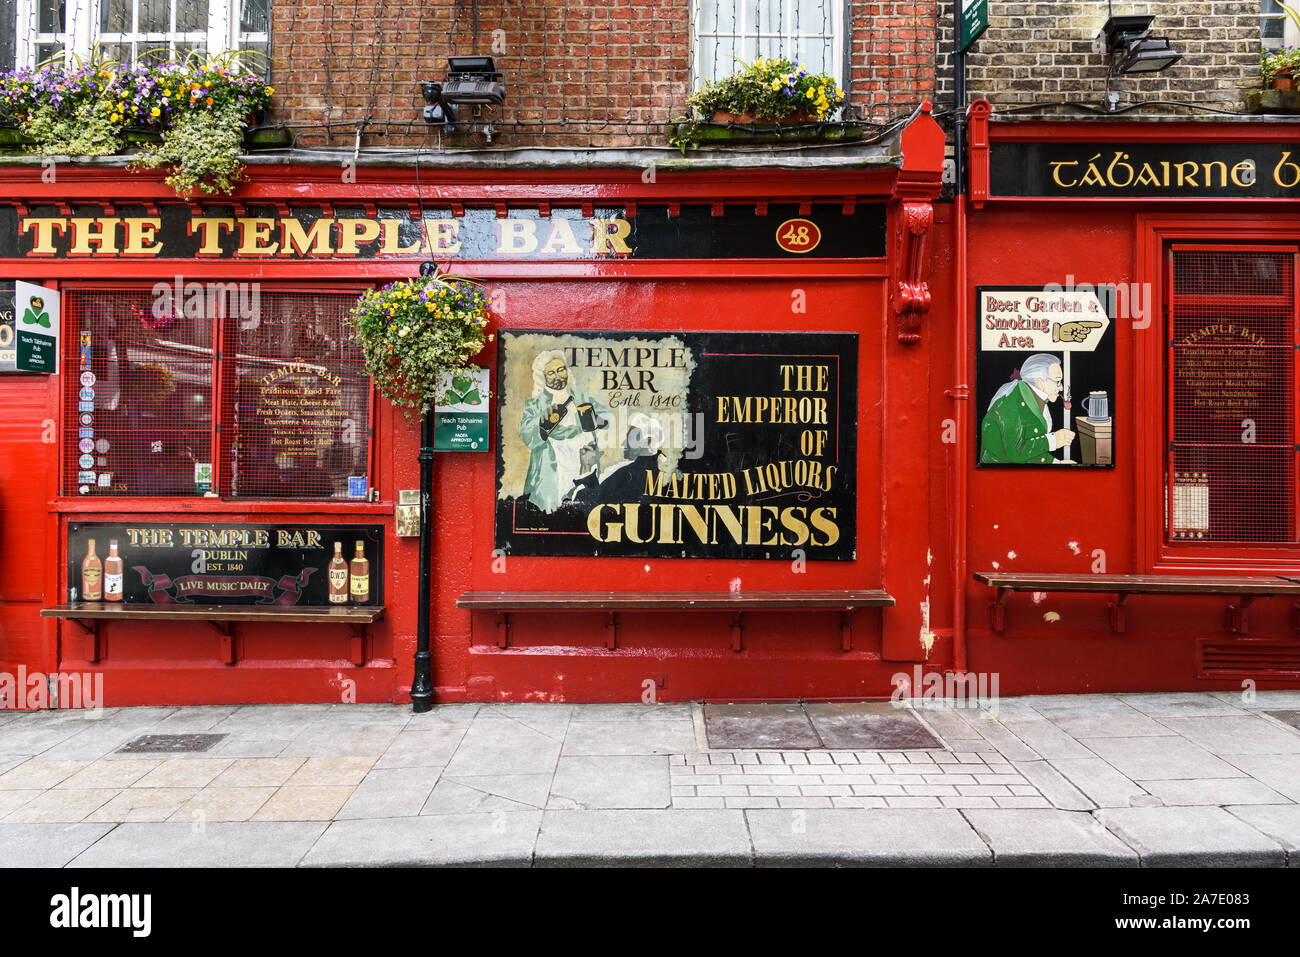 Der KAUFMANN ARCH, Temple Bar, Dublin, Irland - 03 April 2015: Temple Bar ist ein Irish Pub Restaurant in Dublin Stockfoto